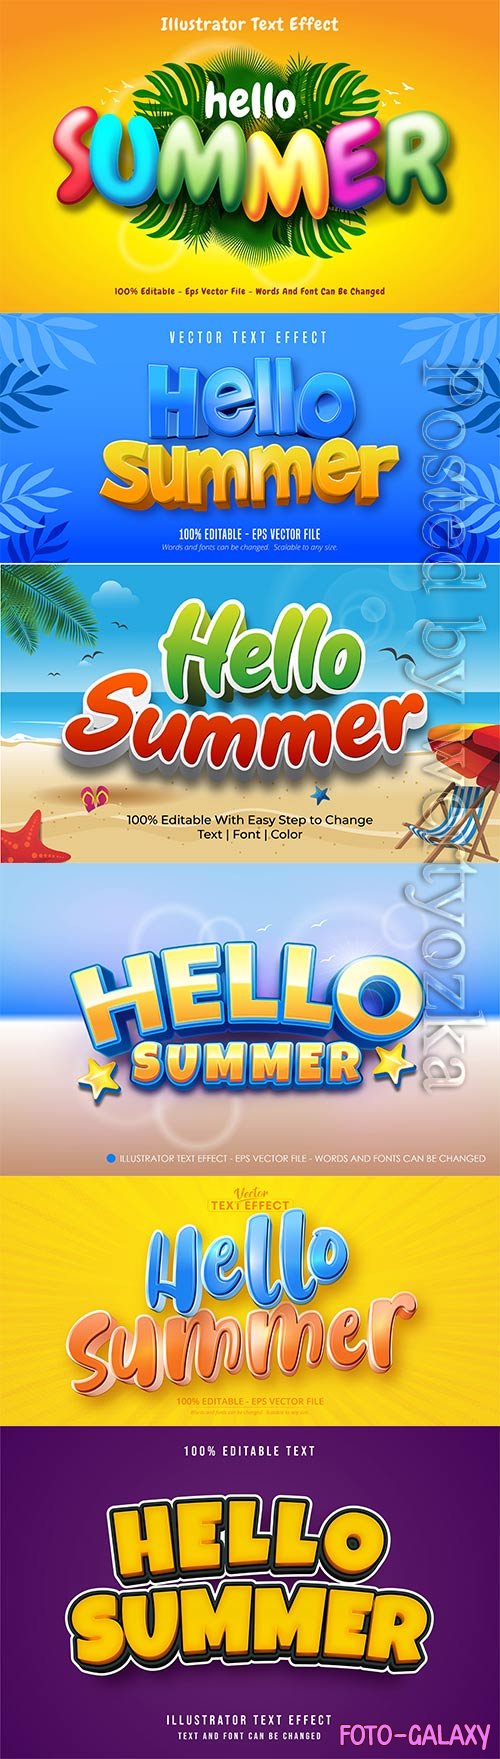 Editable text effect, hello summer style illustrations